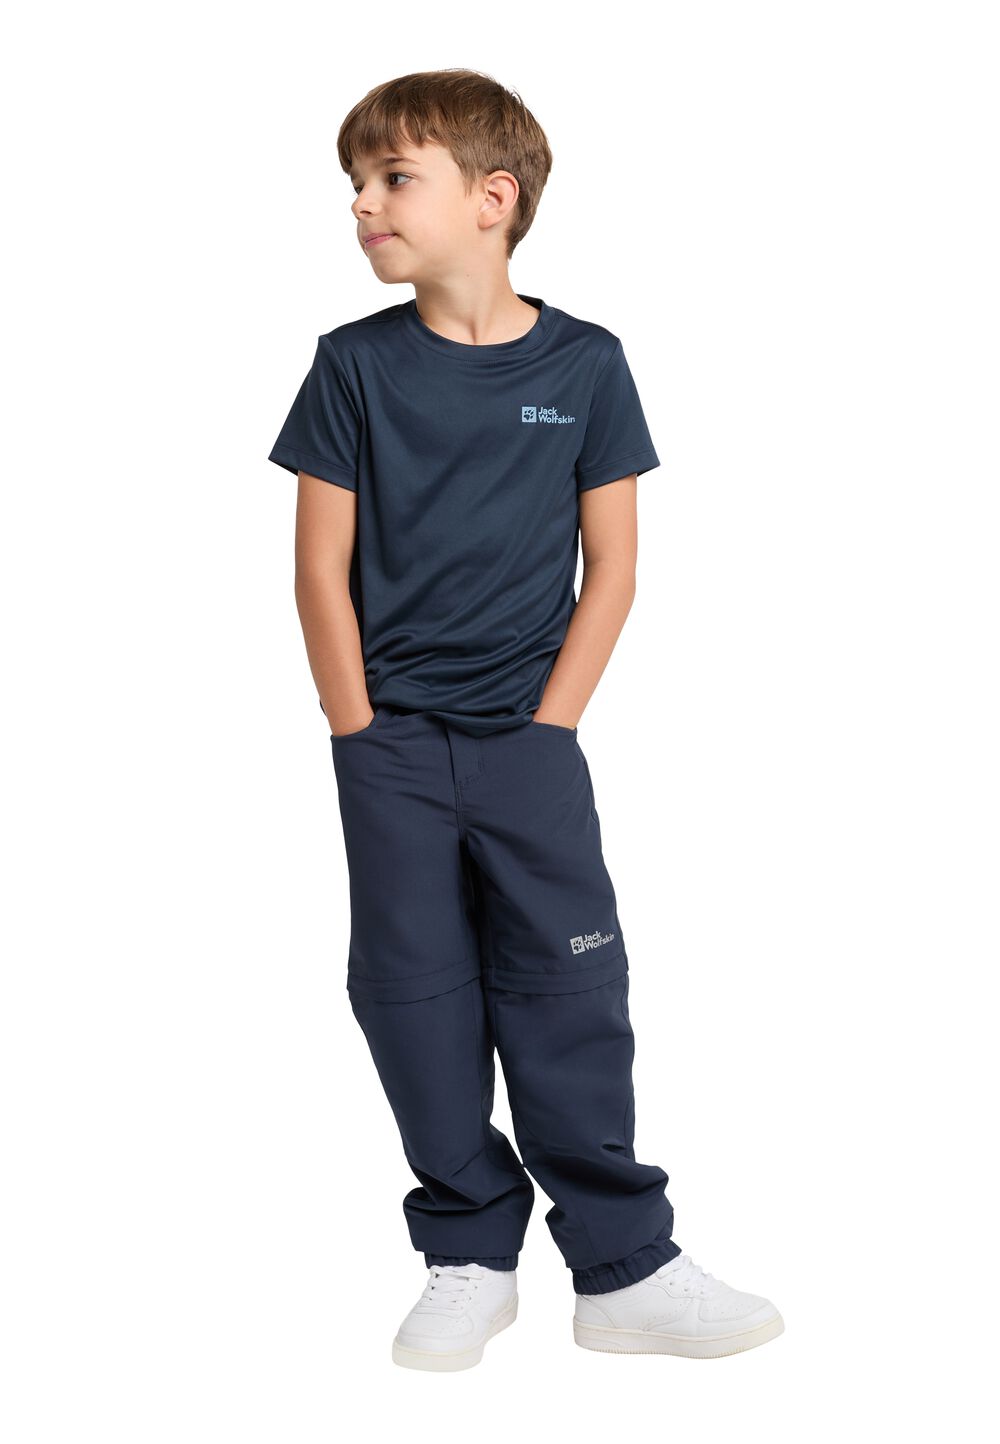 Jack Wolfskin Active Solid T-Shirt Kids Functioneel shirt Kinderen 140 blue night blue